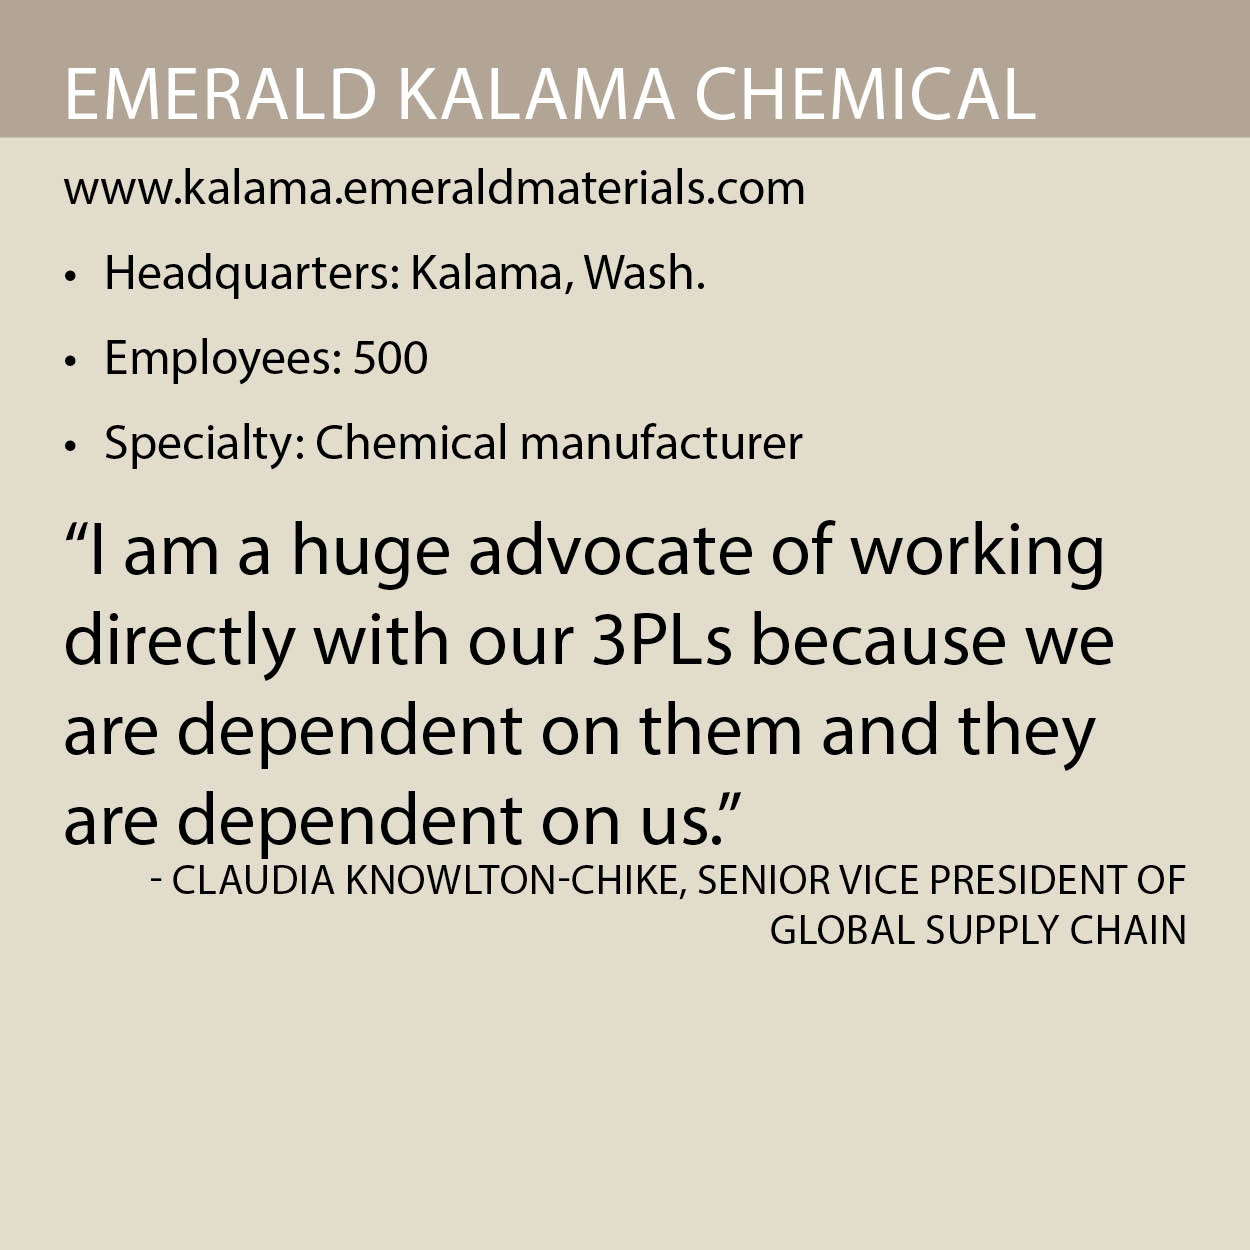 Emerald Kalama Chemical fact box